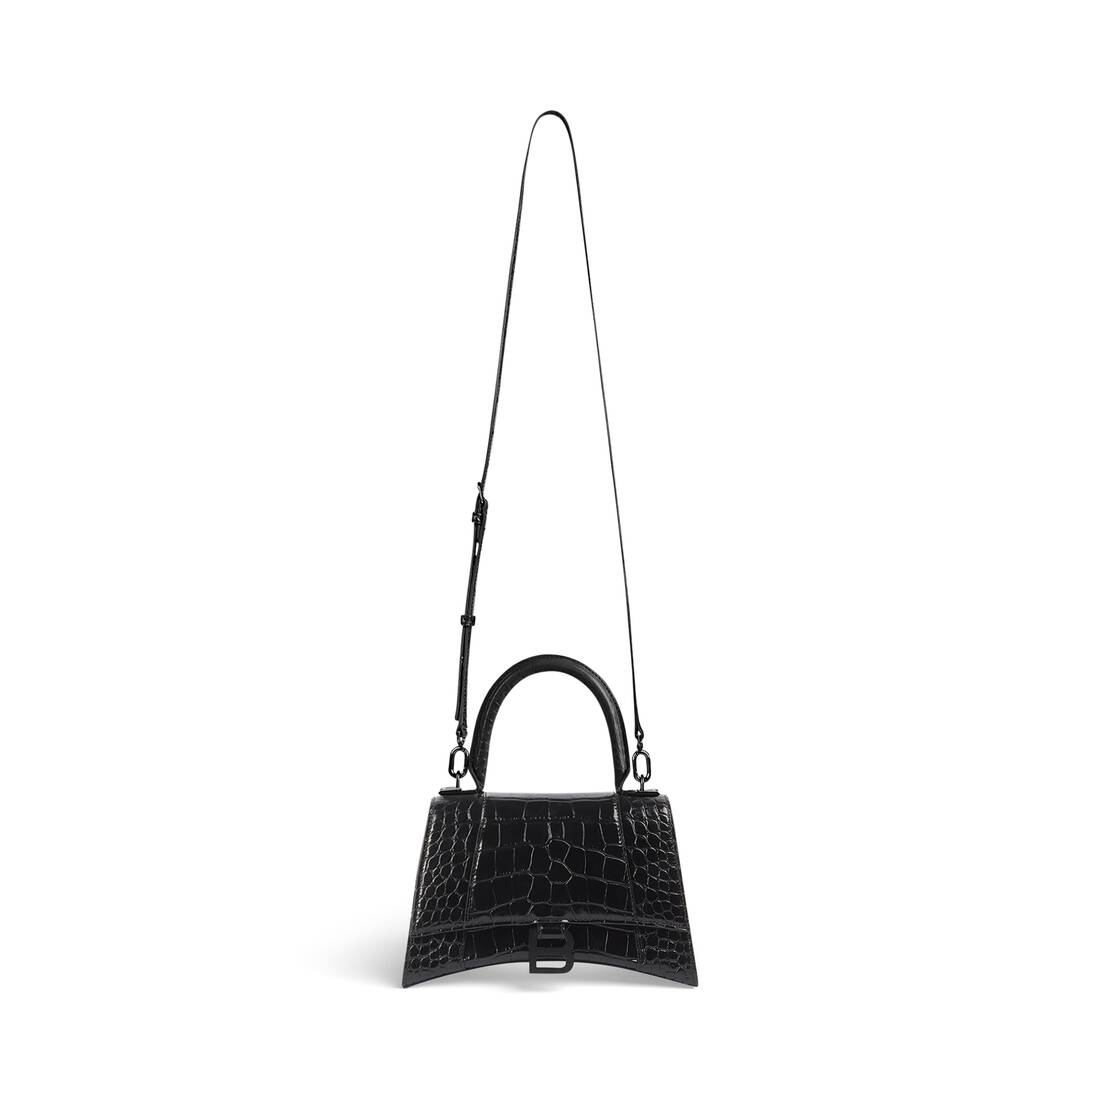 Balenciaga x Crocs Tote Bag Phone Holder Collab Release Price